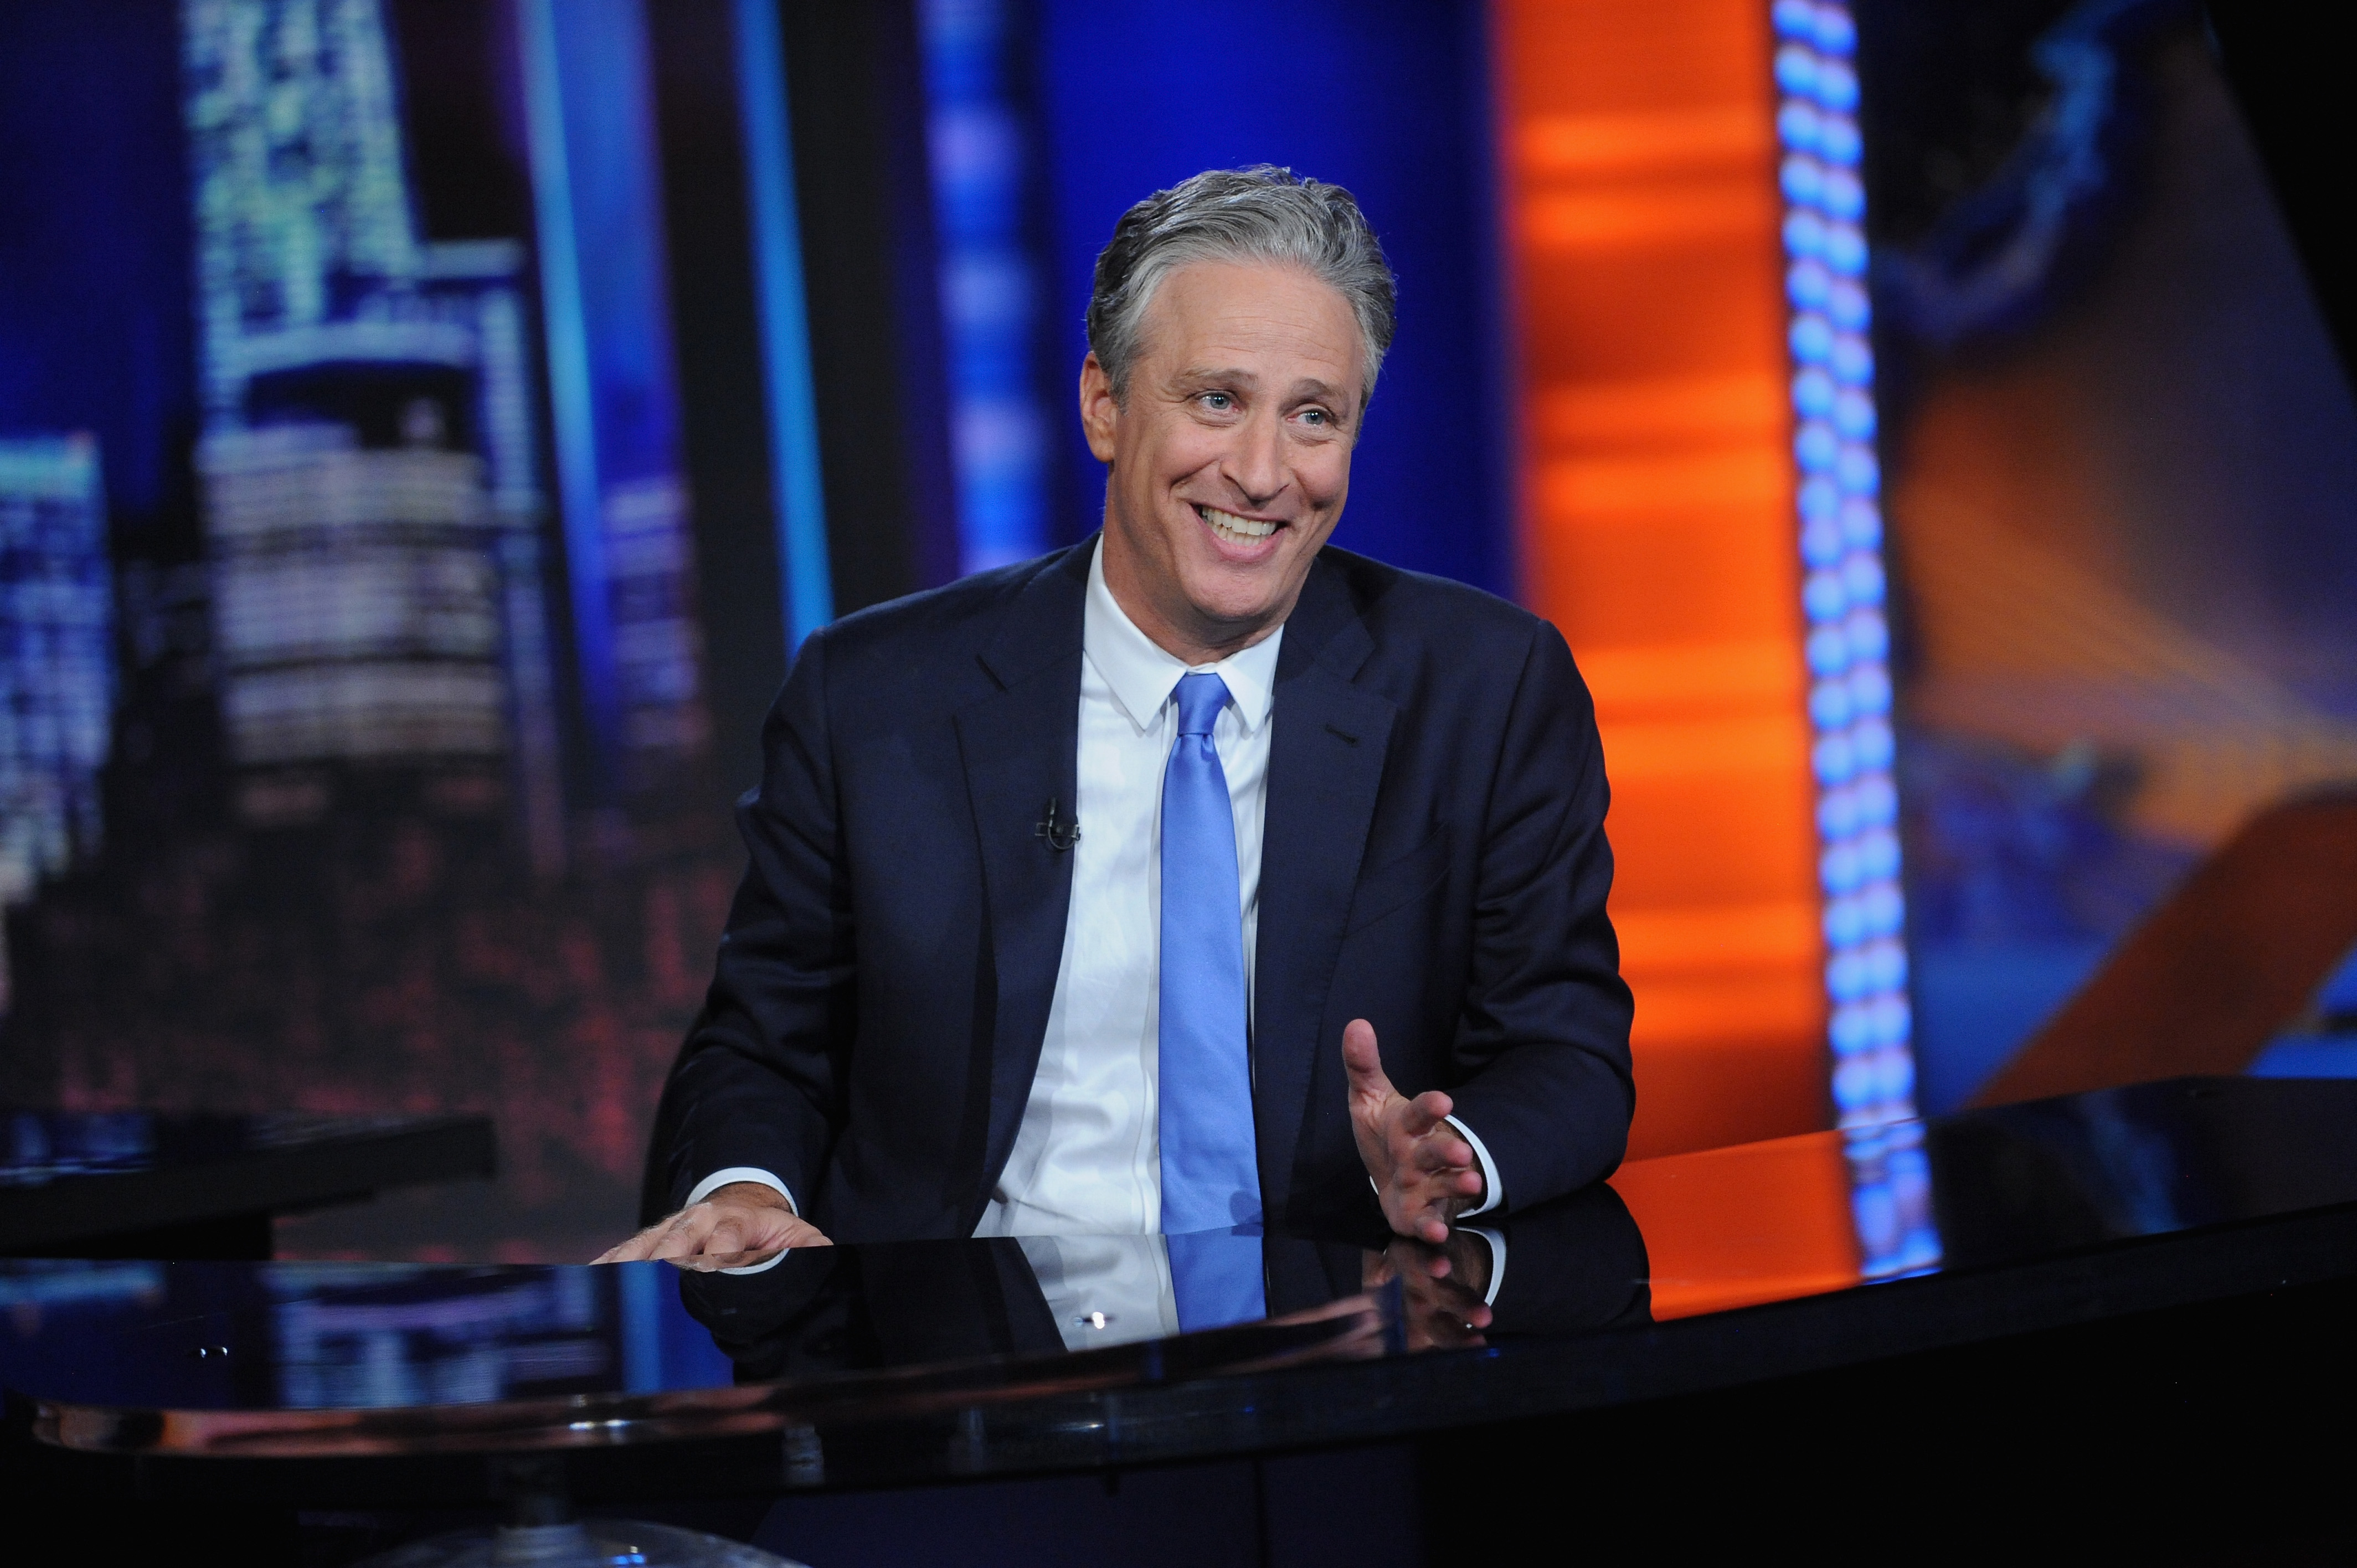 Jon Stewart hosts "The Daily Show with Jon Stewart" #JonVoyage on August 6, 2015 in New York City. (Brad Barket&mdash;Comedy Central/Getty Images)